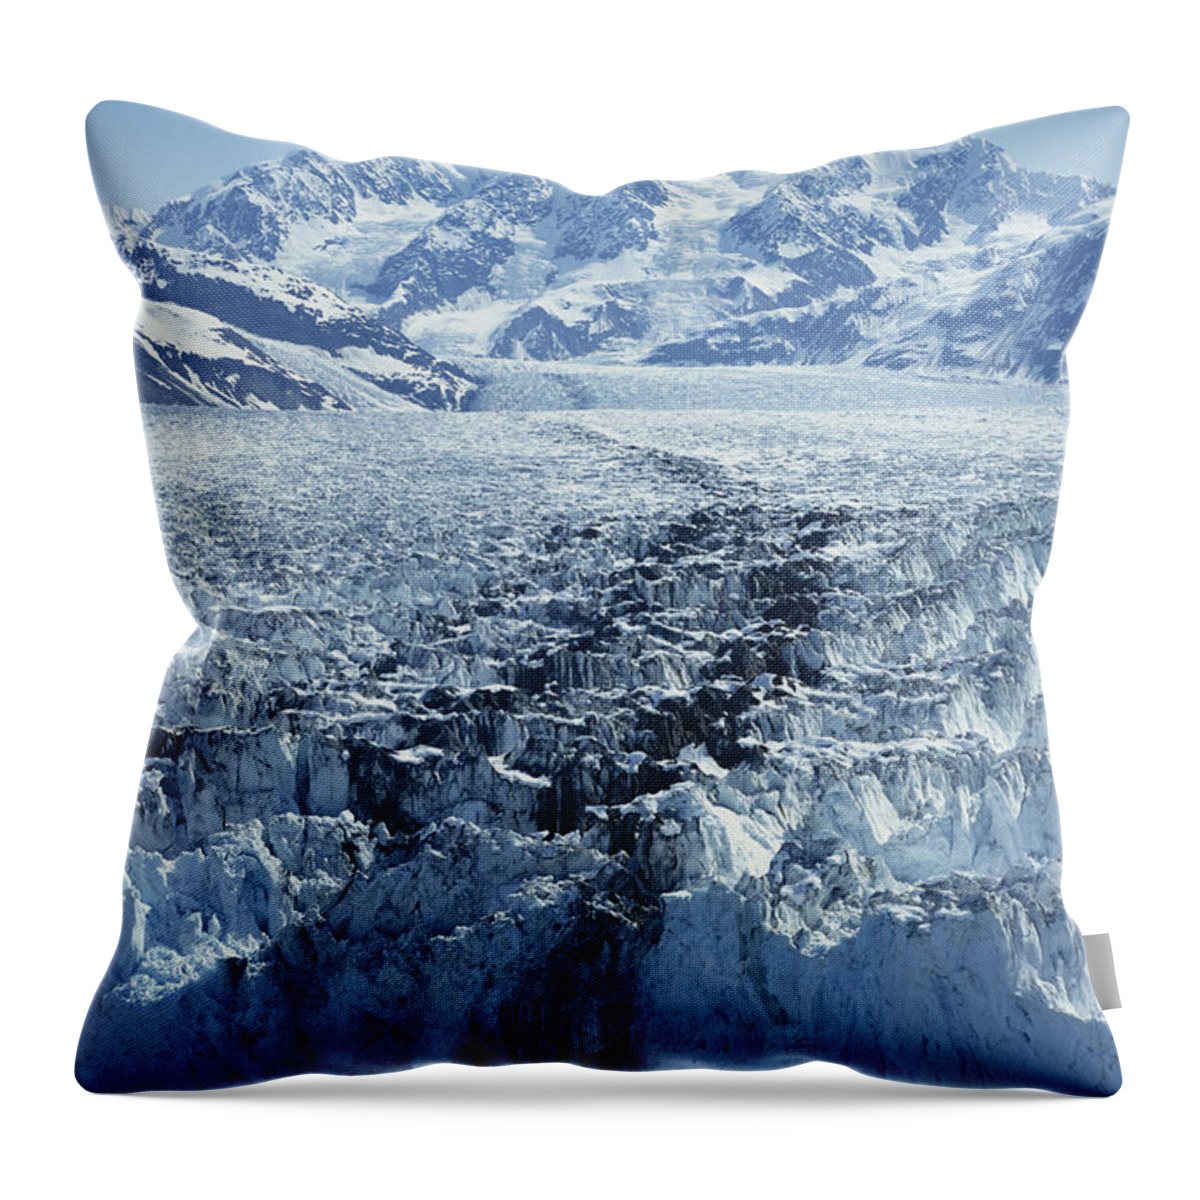 Glacier Throw Pillow featuring the photograph Hubbard Glacier by Joseph Rychetnik